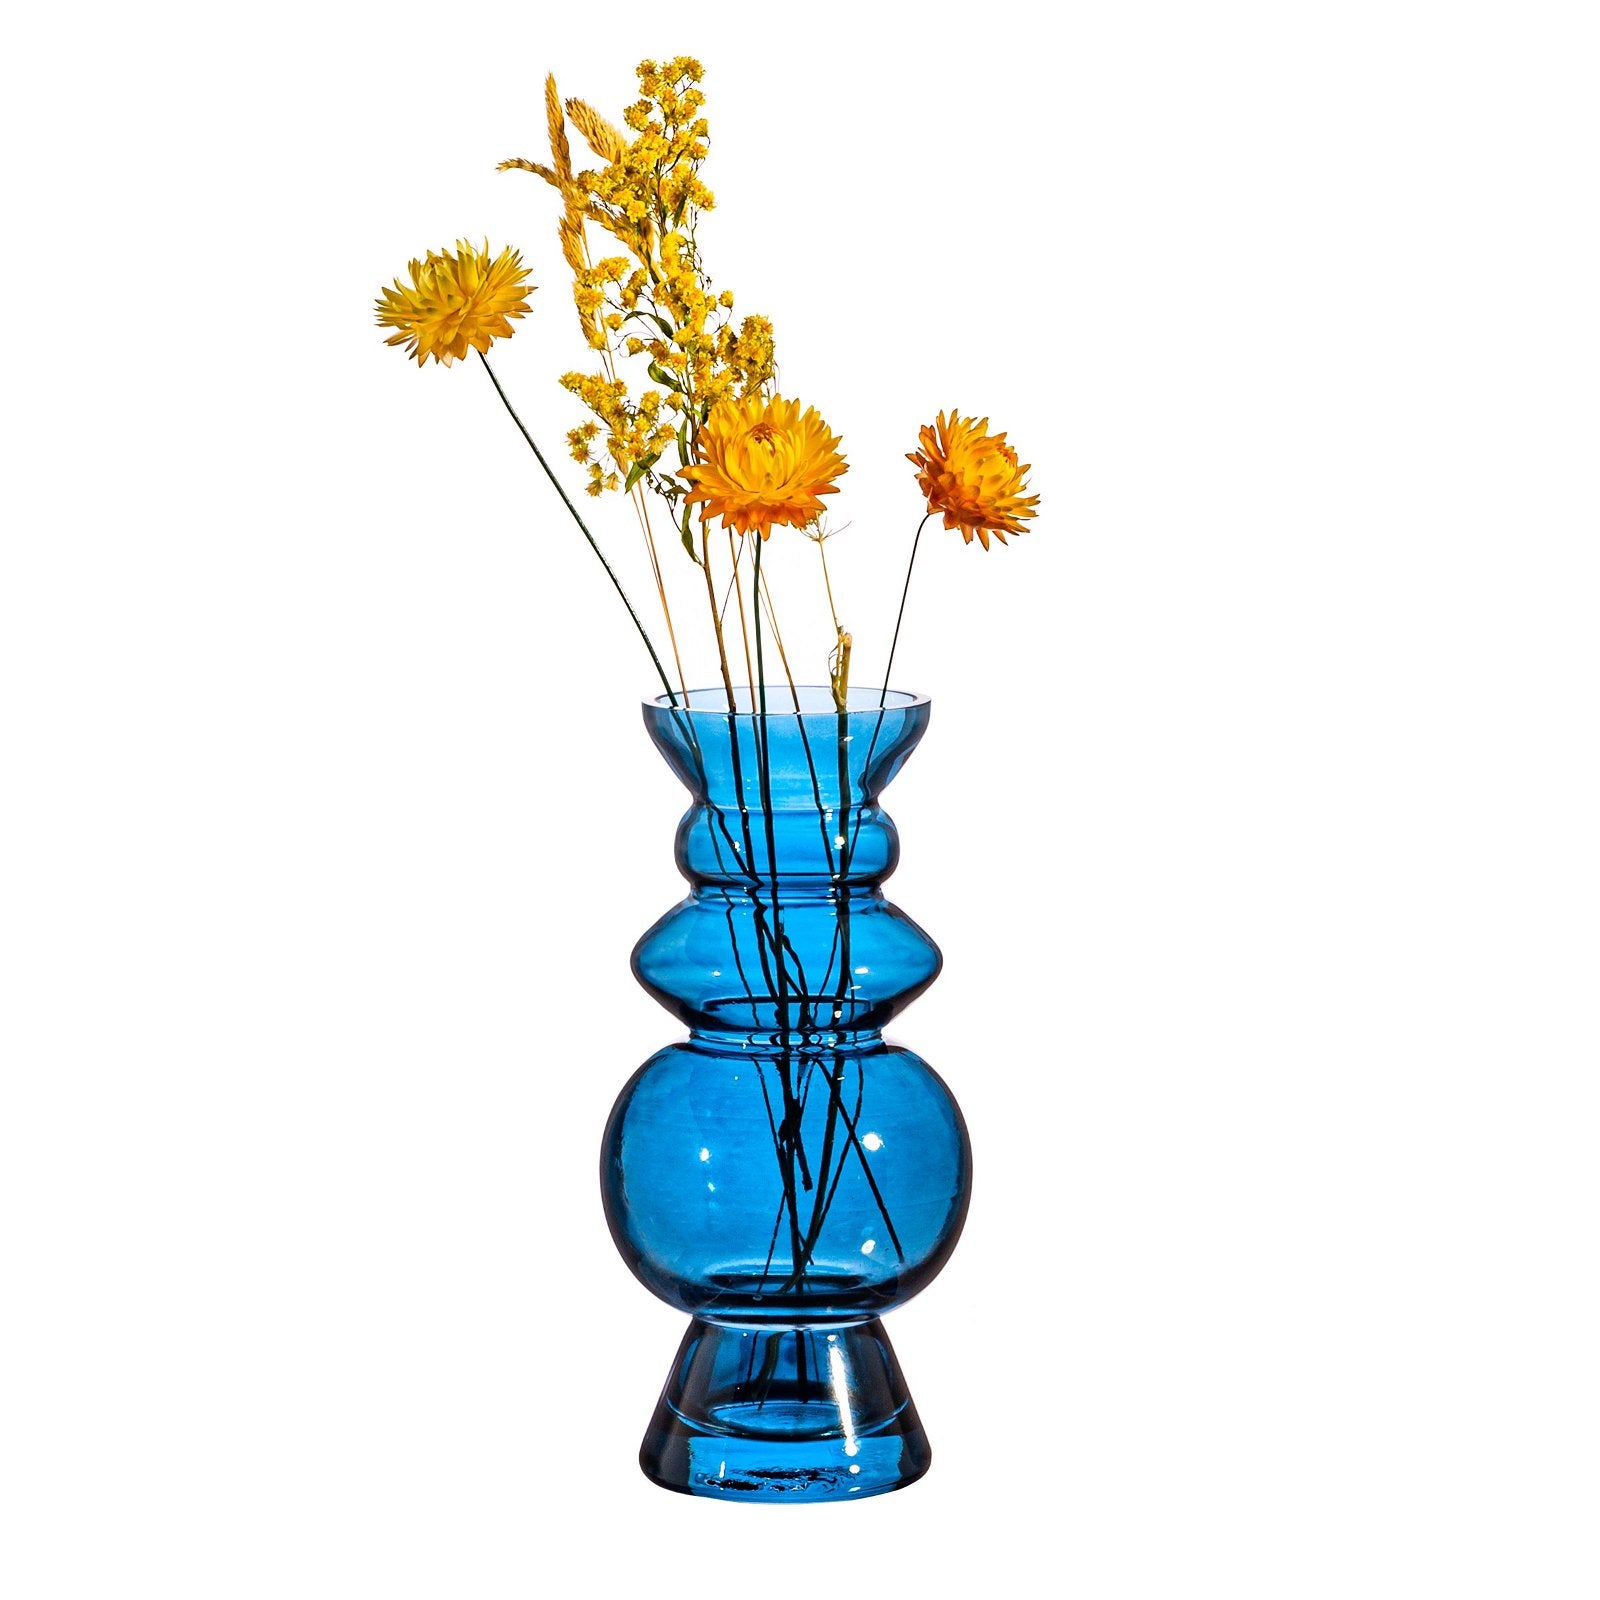 View Selina Glass Vase Blue information